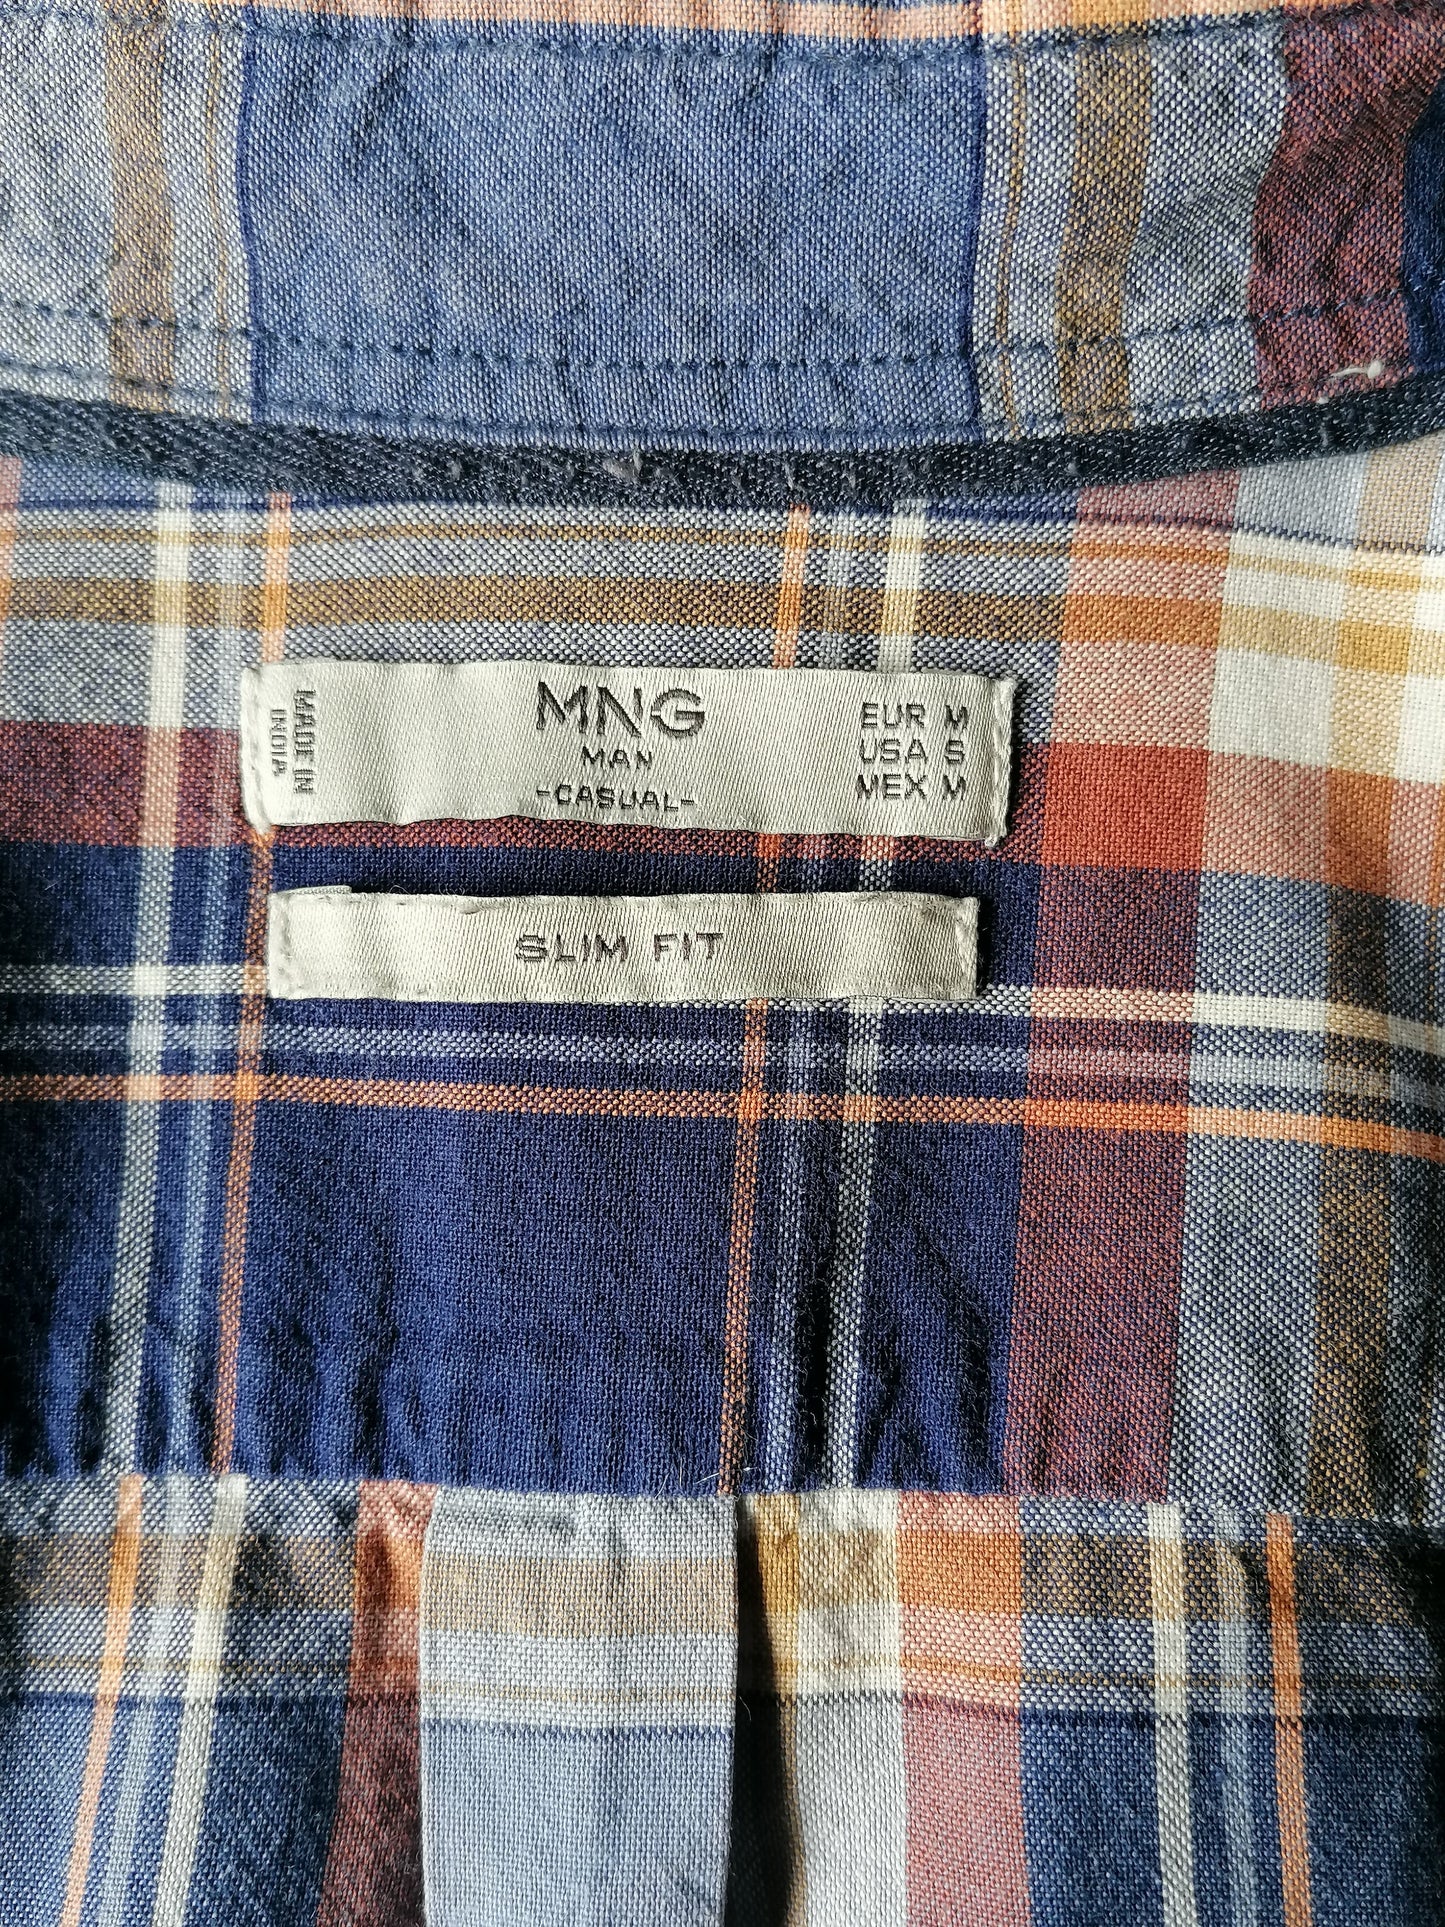 Mng man shirt. Blue orange brown checked. Size M. Slim Fit.